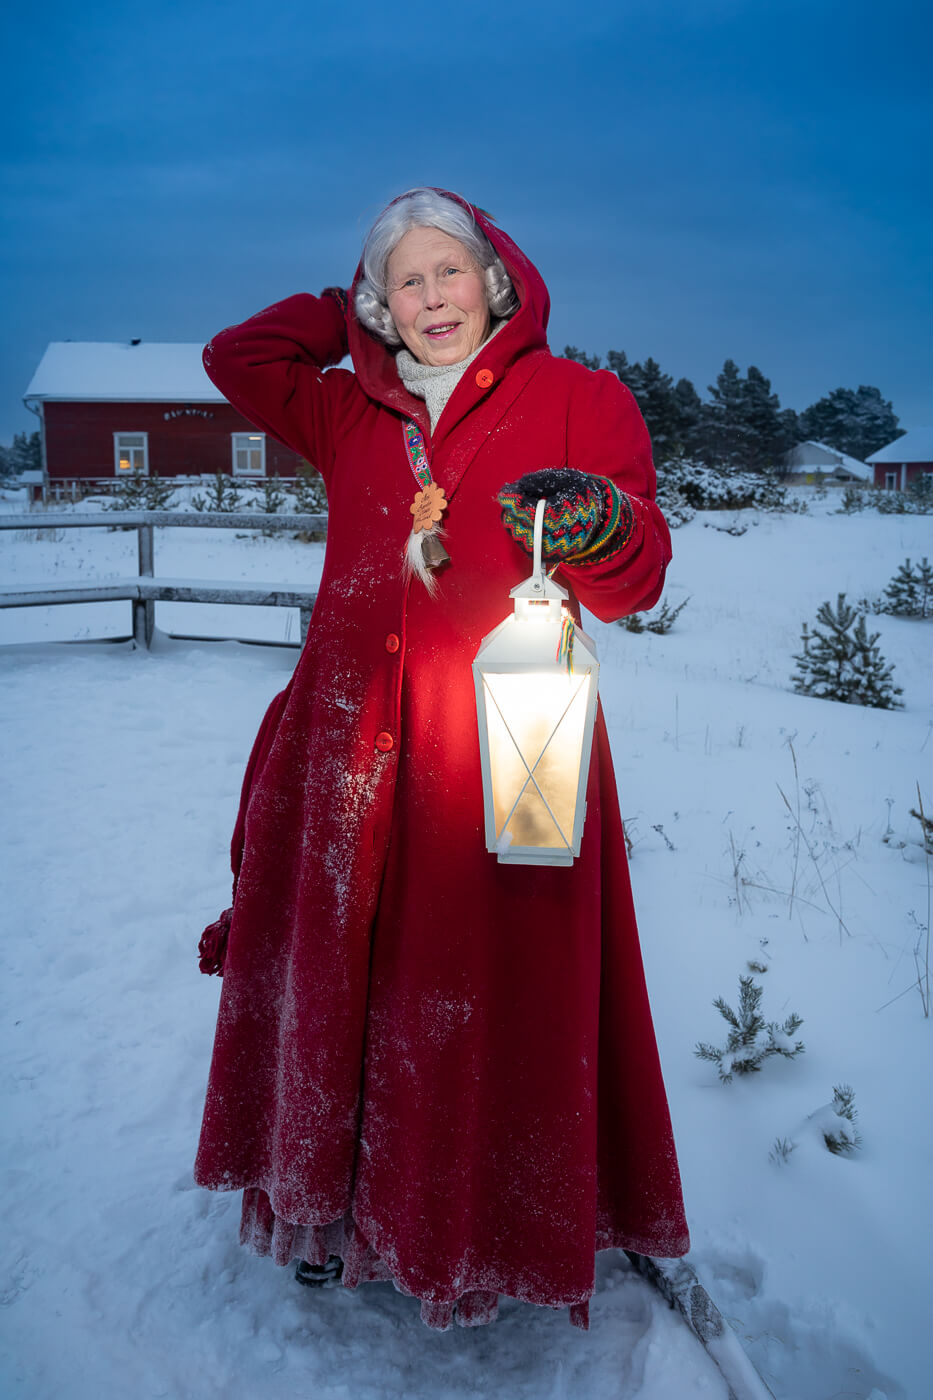 Meet Mrs. Santa Claus Finland at the Whitefish Market of Hailuoto